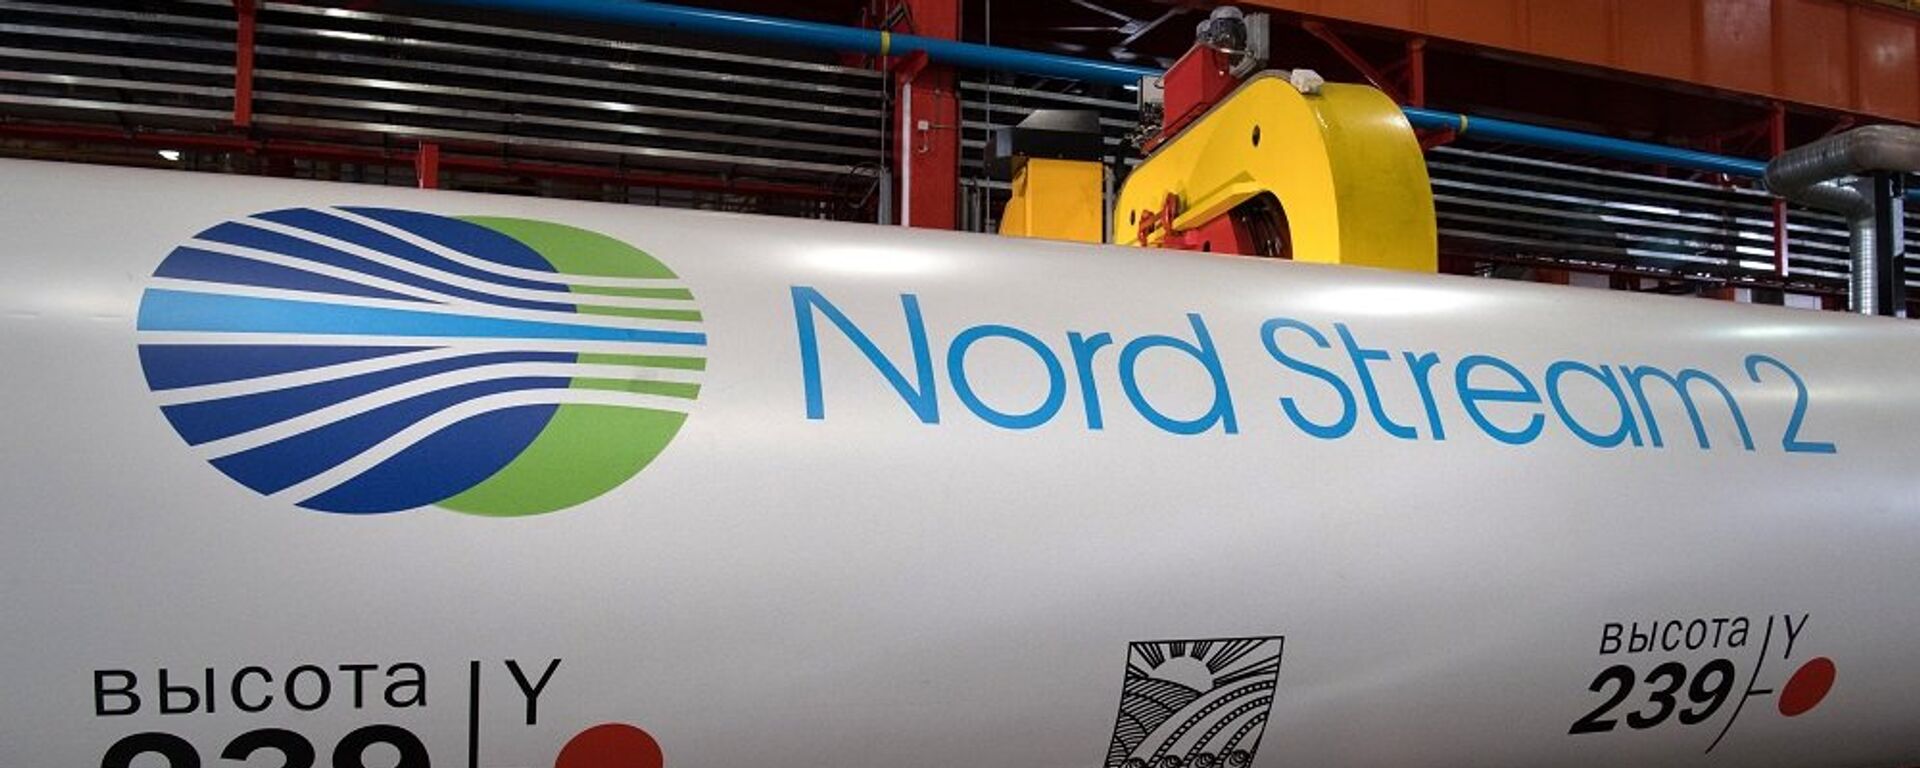 Nord Stream 2公司将评估北溪2号项目对俄环境影响 - 俄罗斯卫星通讯社, 1920, 10.09.2021